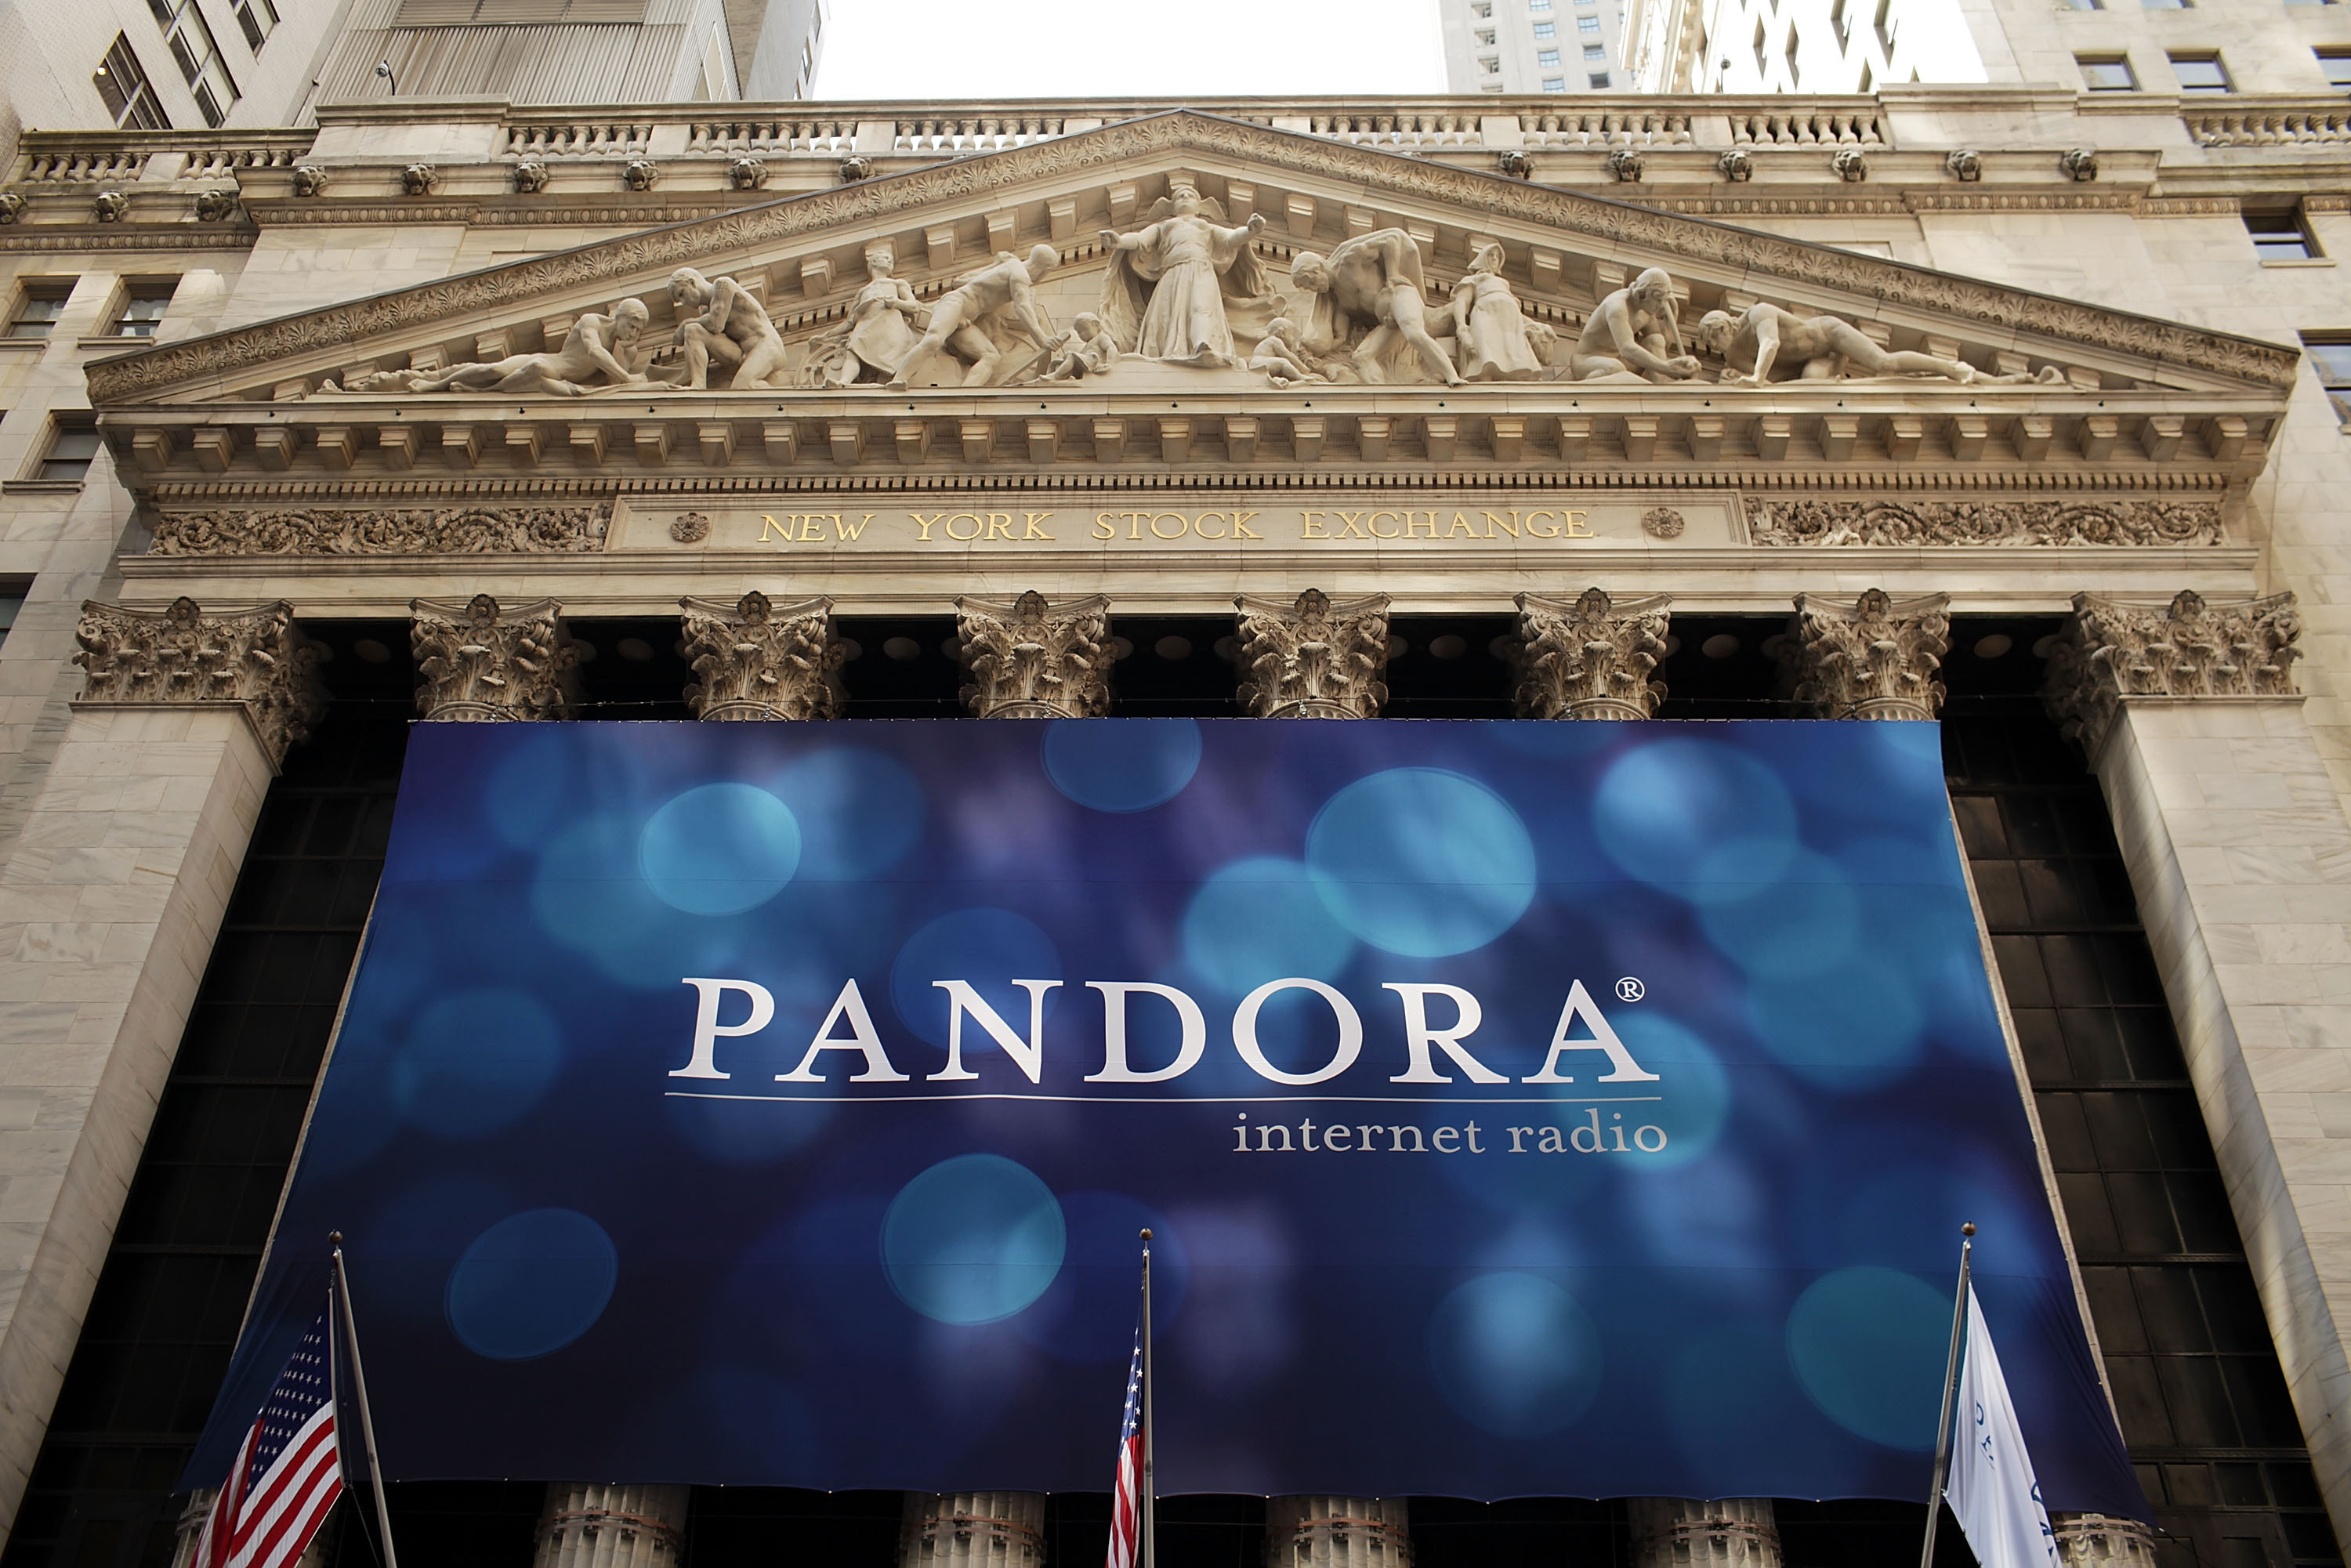 SiriusXM is acquiring Pandora for $3.5 billion